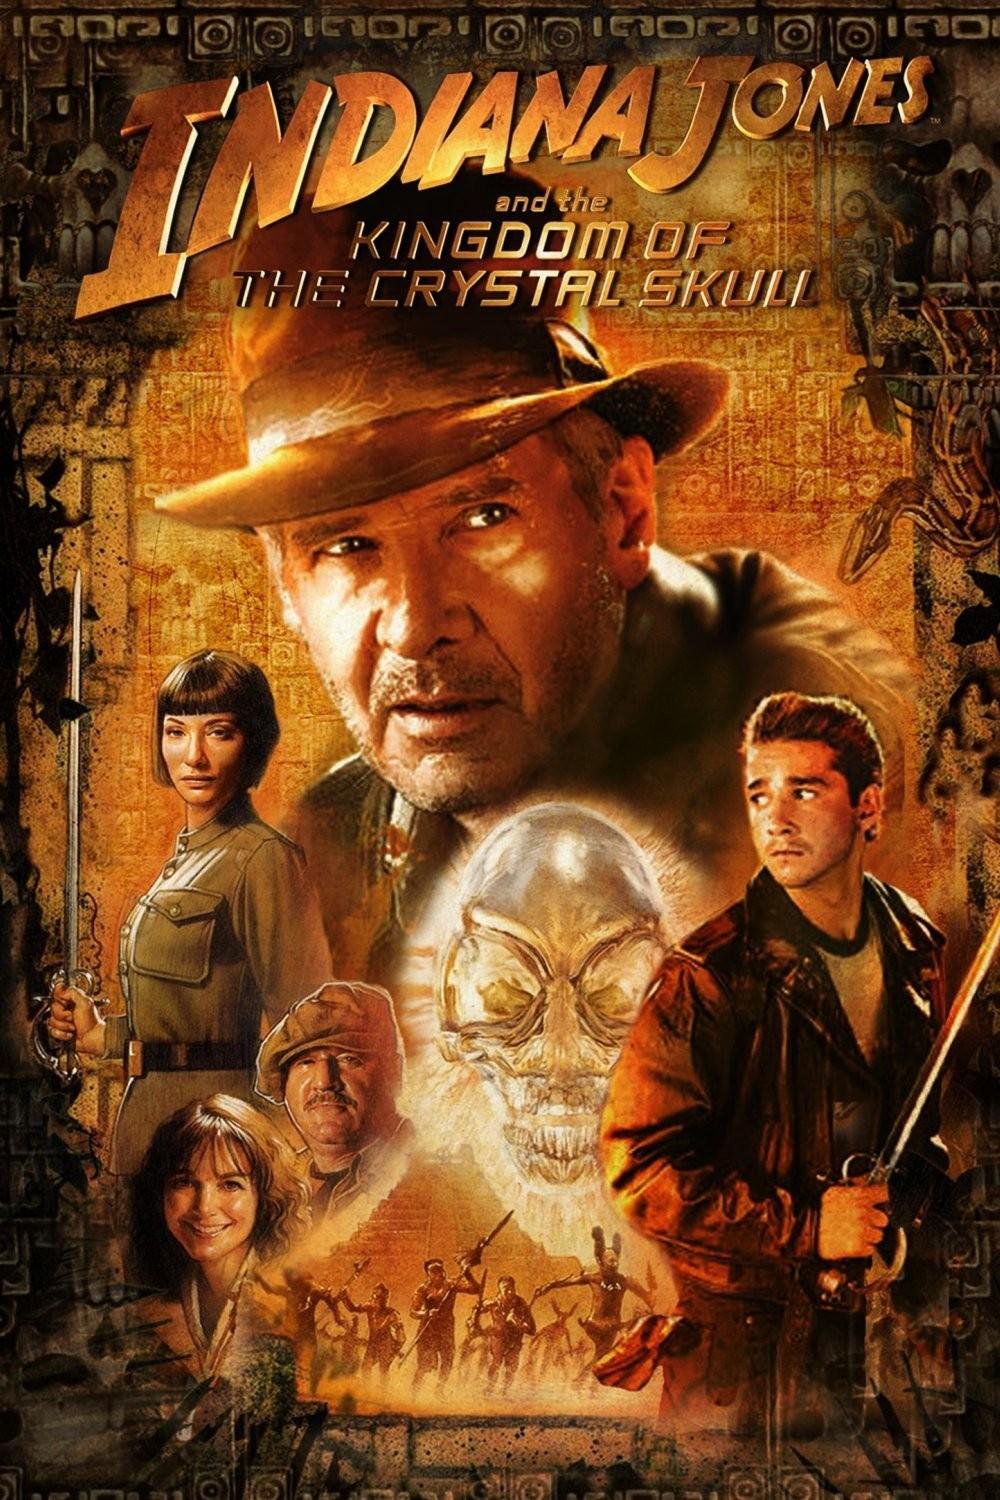 Indiana Jones Making The Trilogy